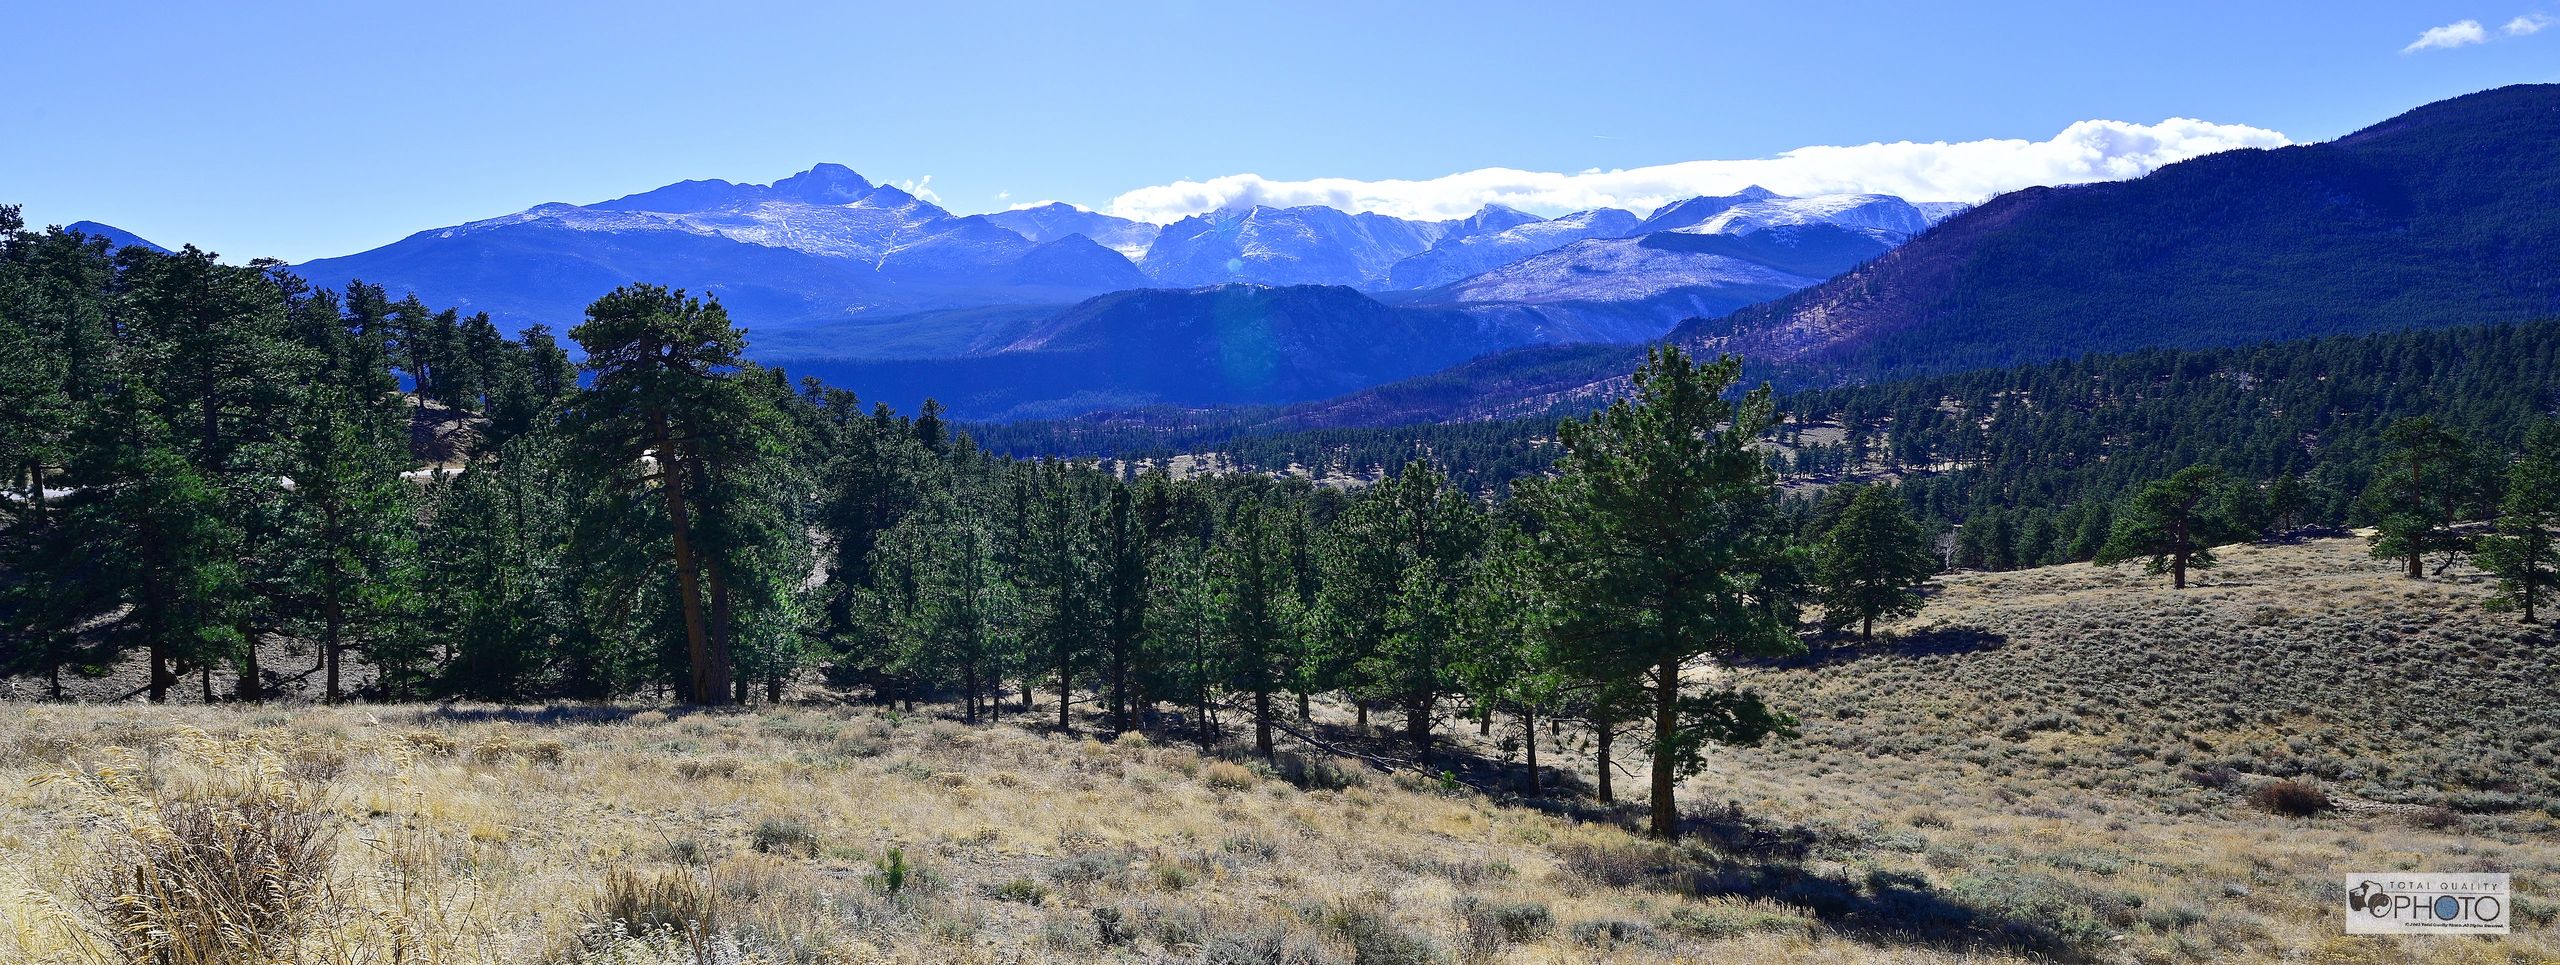 Pines and Rocky Mountains RMNP Panorama